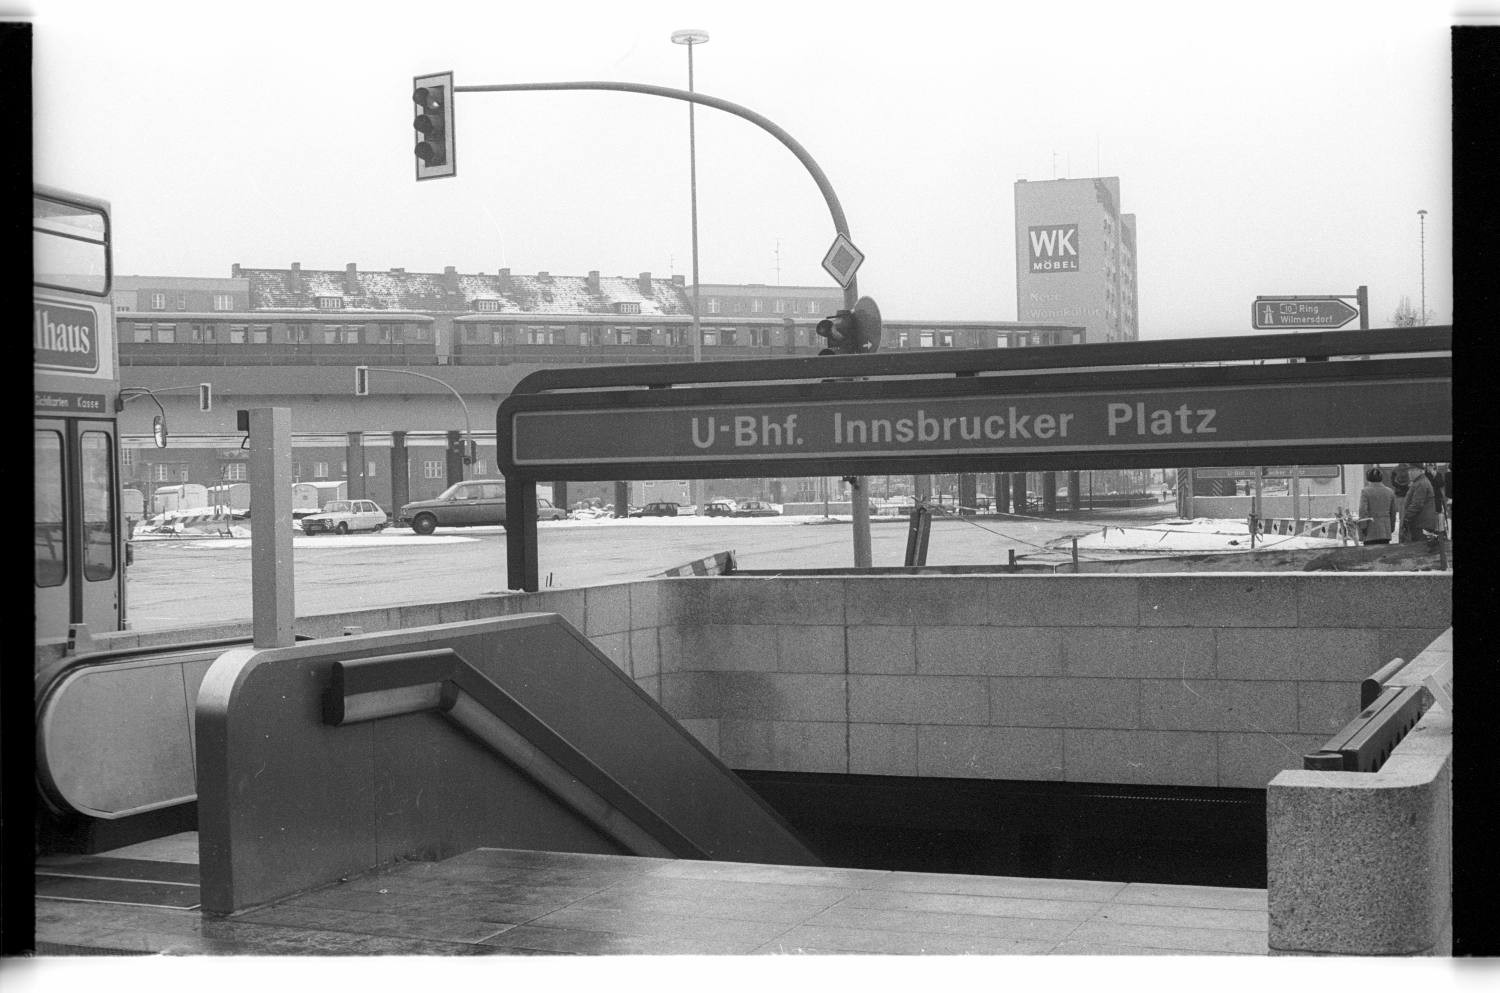 Kleinbildnegative: U-Bahnhof, Innsbrucker Platz, 1980 (Museen Tempelhof-Schöneberg/Jürgen Henschel RR-F)